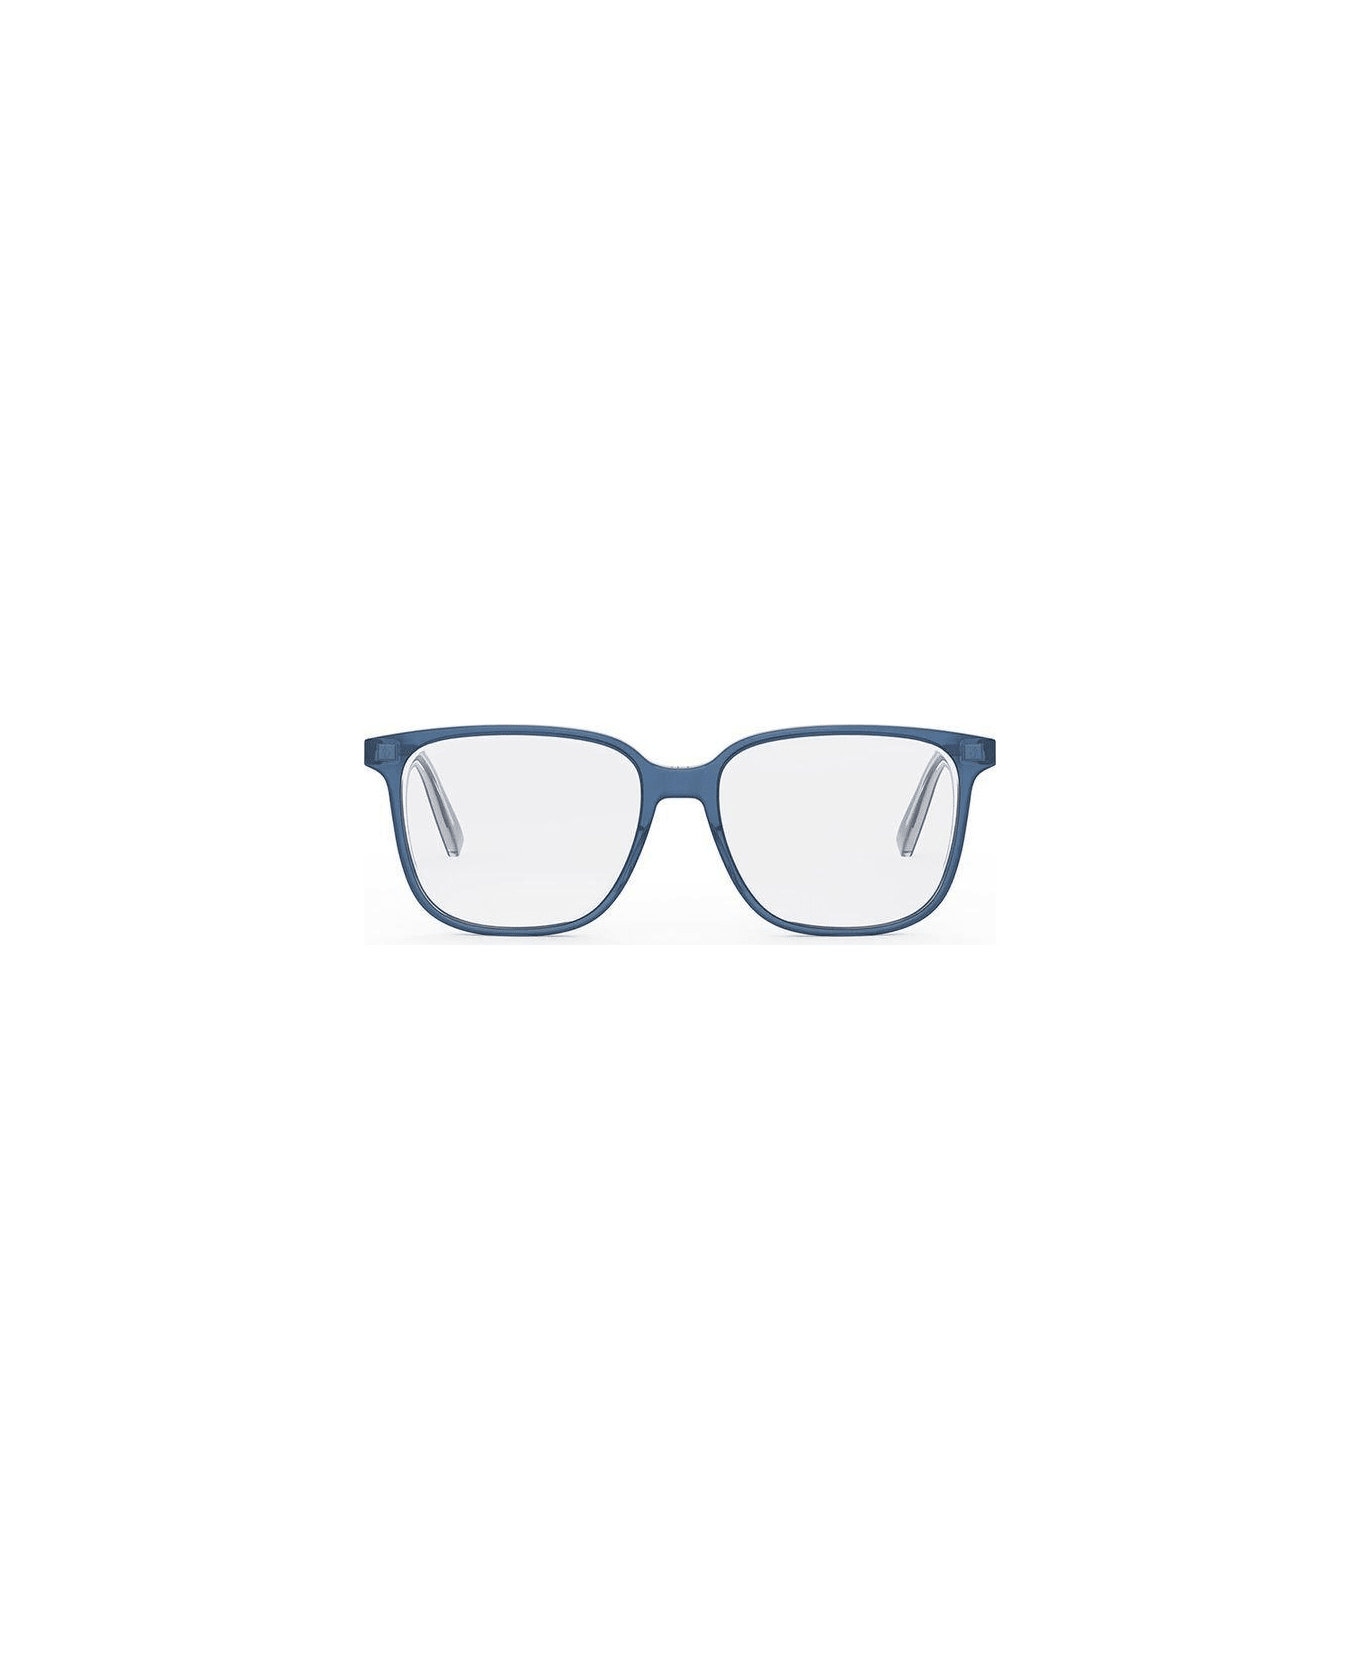 Dior Eyewear Square Frame Glasses - 3000